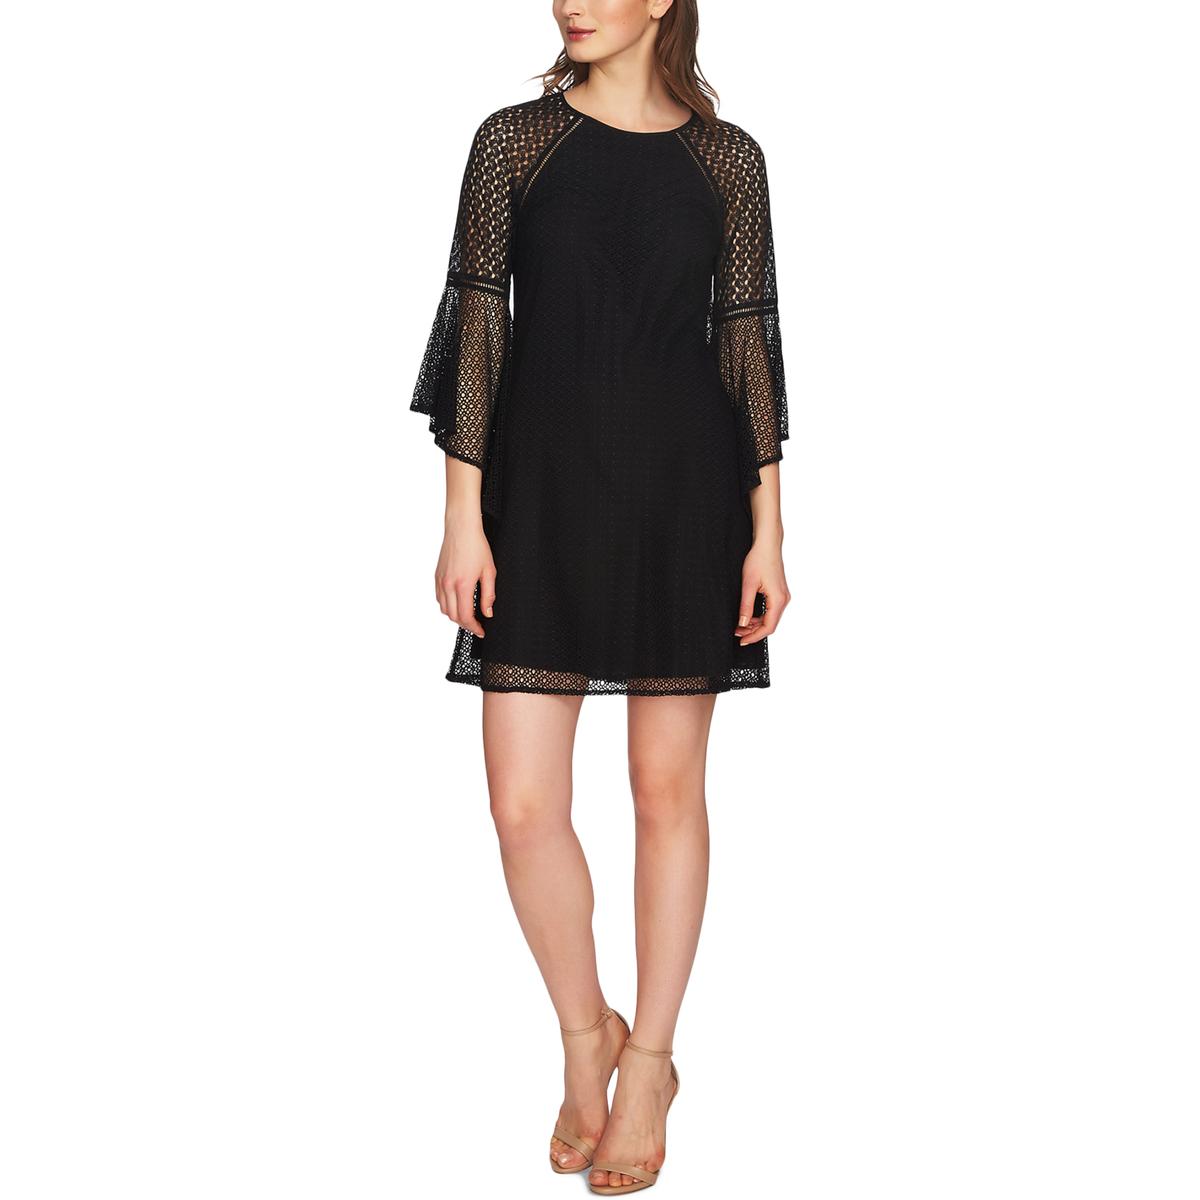 CeCe Womens Black Lace Mini Party Shift Dress 6 BHFO 0274 | eBay